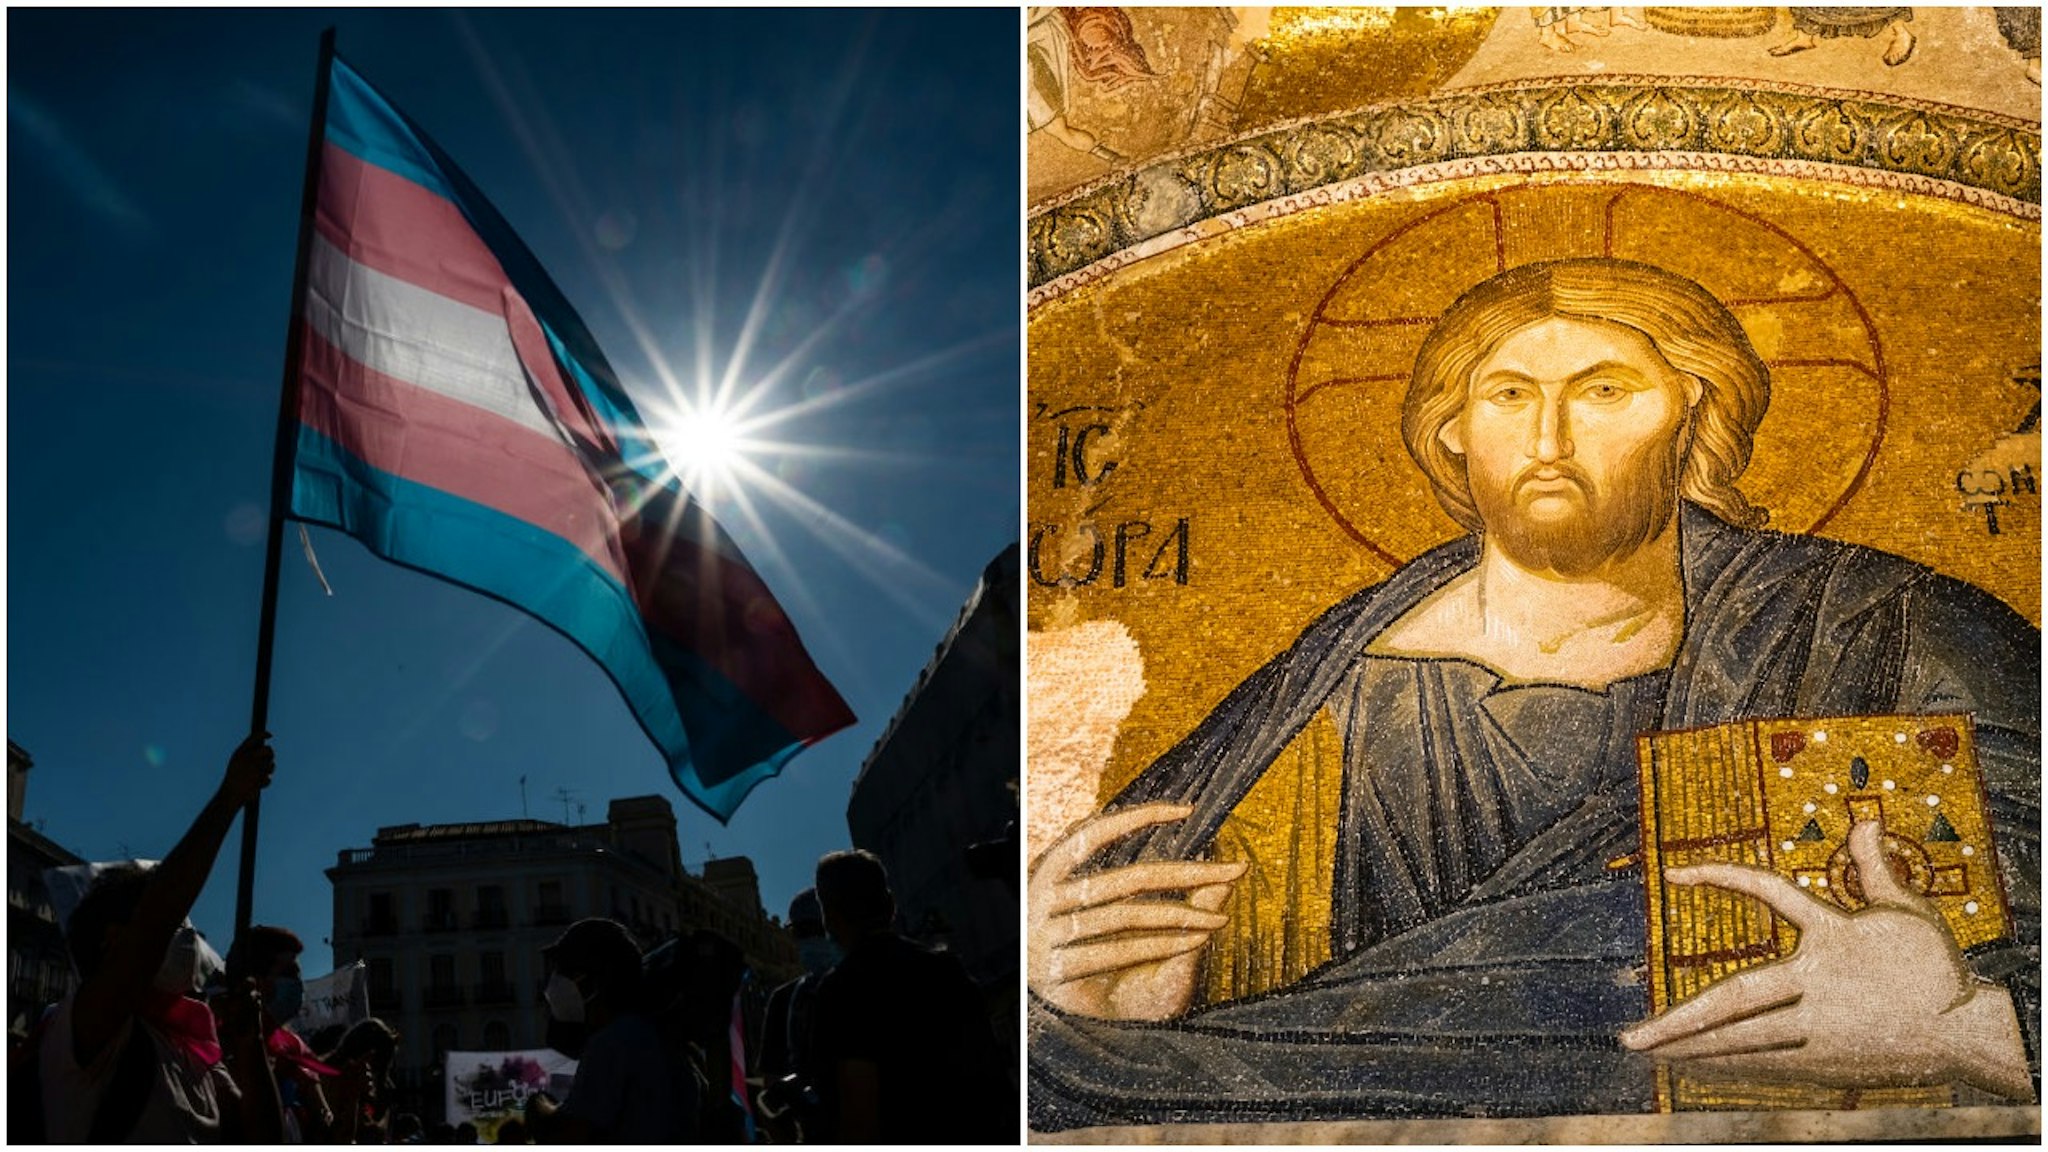 Trans flag and Jesus Christ